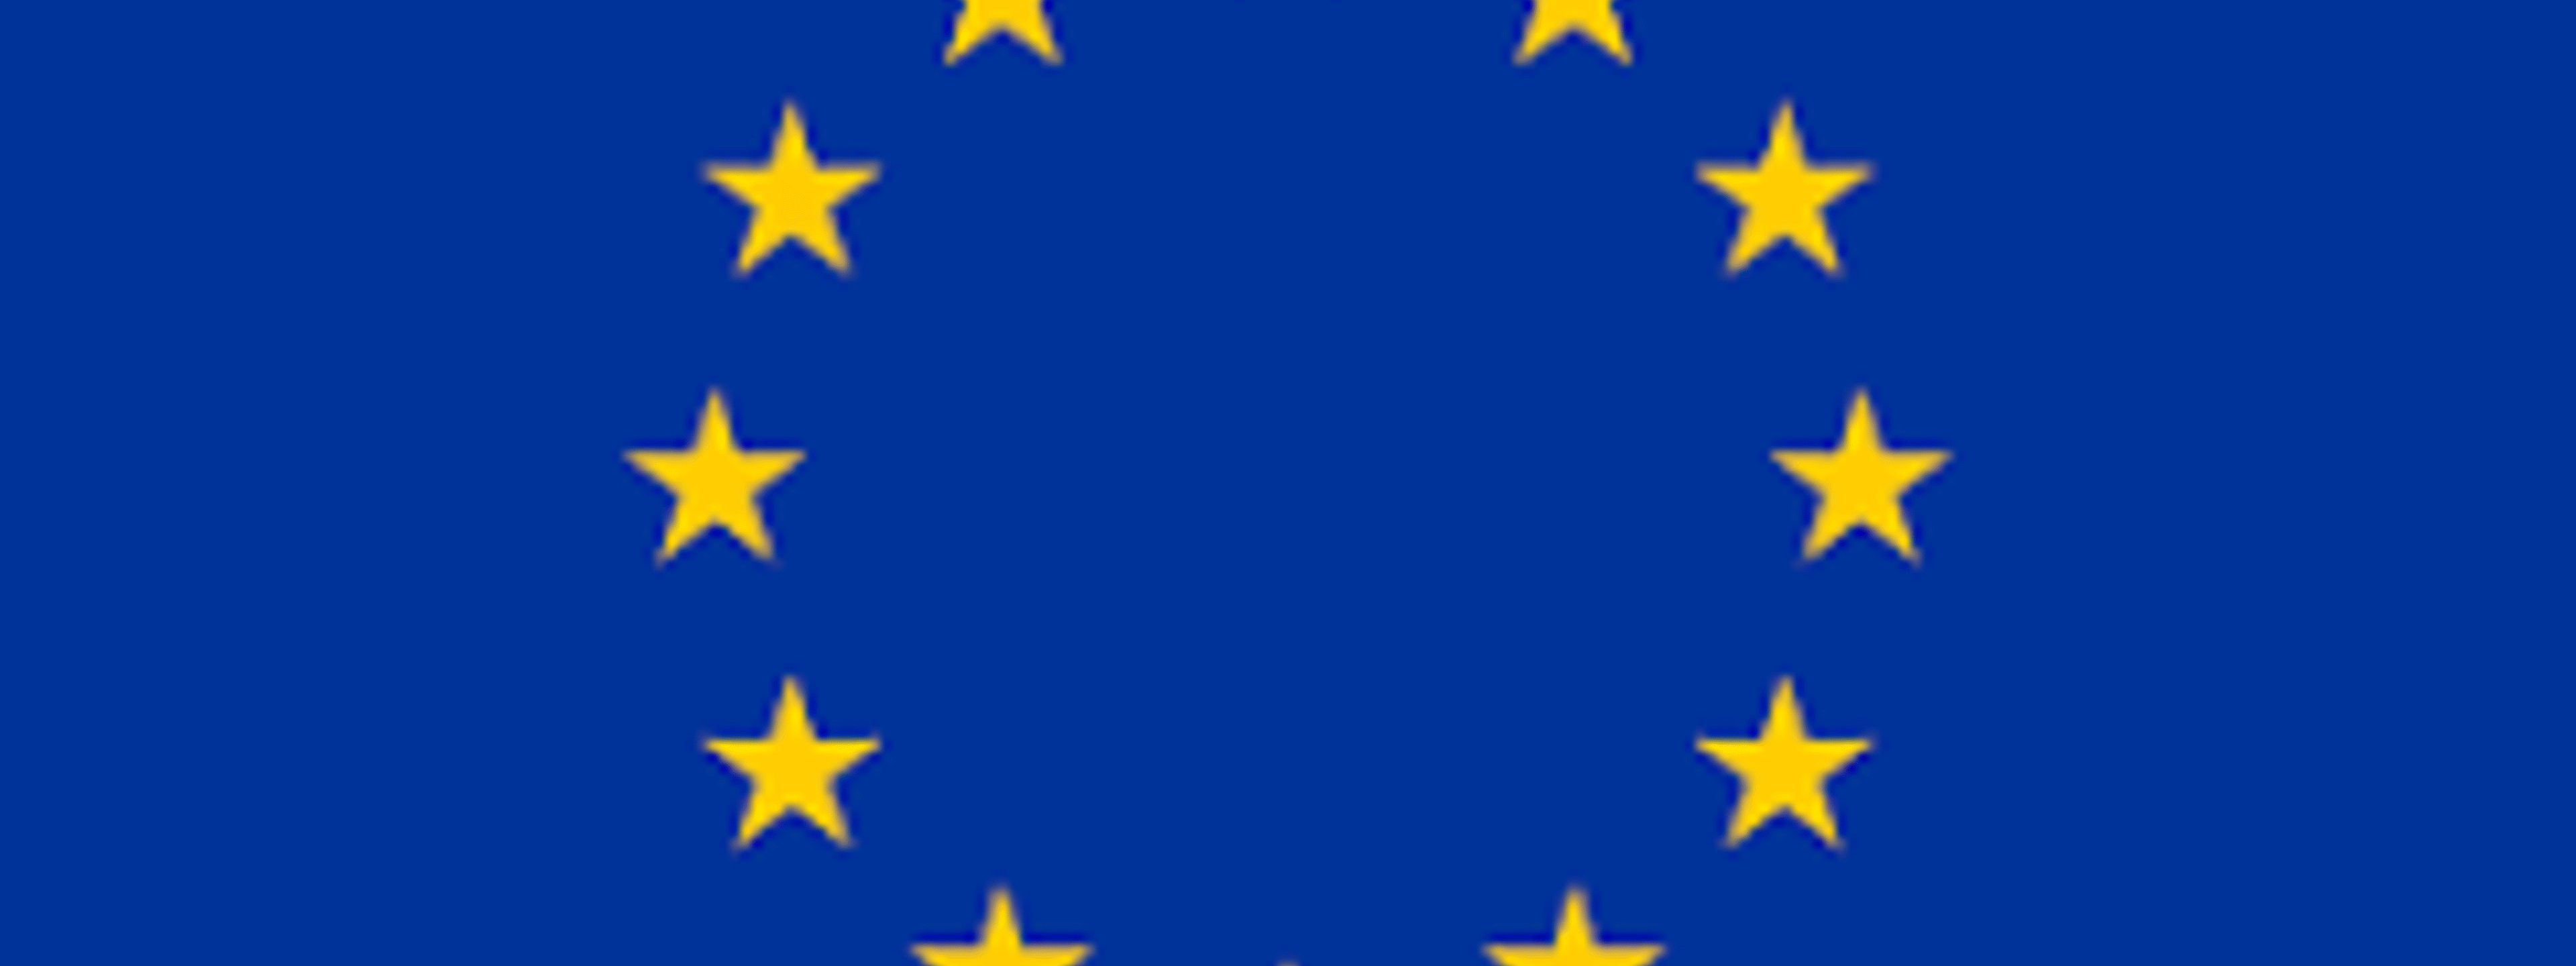 EU flagget. Blått flagg med gule stjerner i ein sirkel.